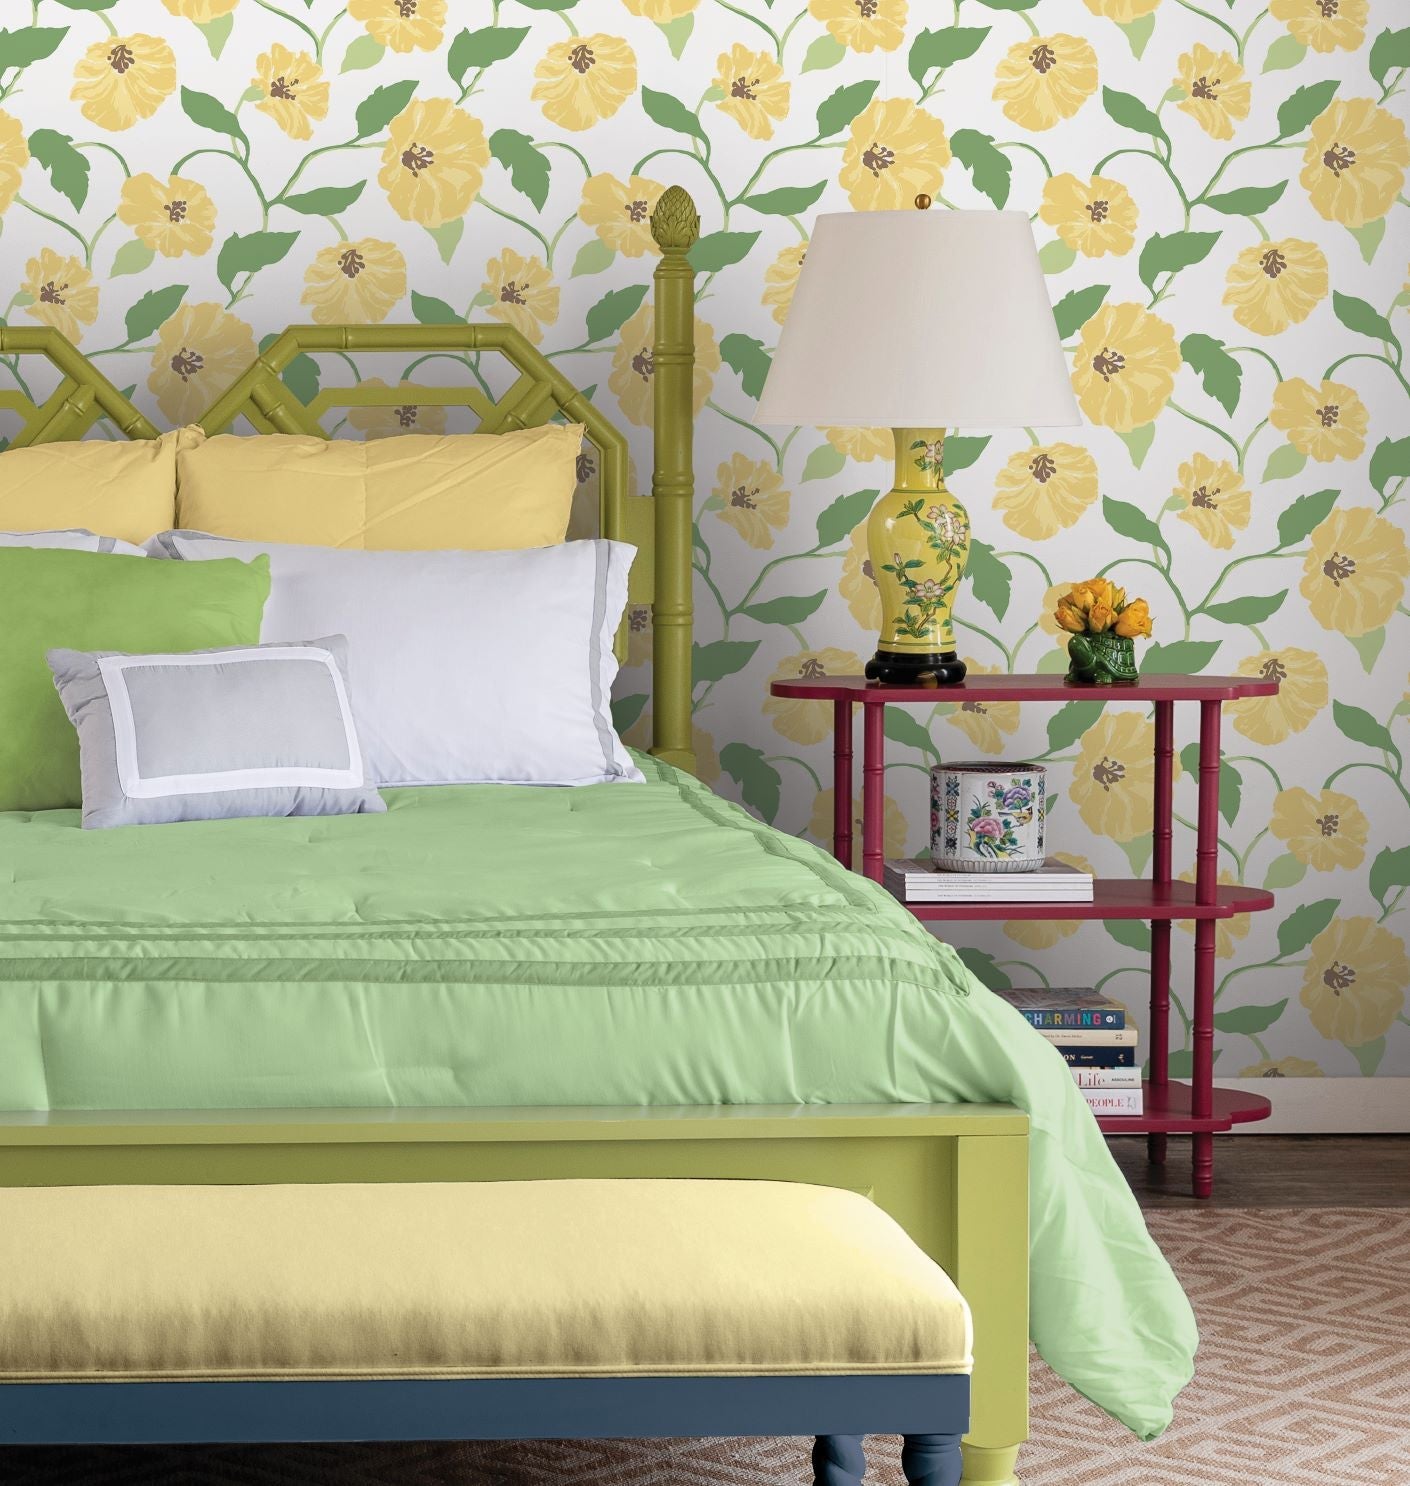 Jungle Garden Lemon Grove Yellow Peel & Stick Wallpaper Sample